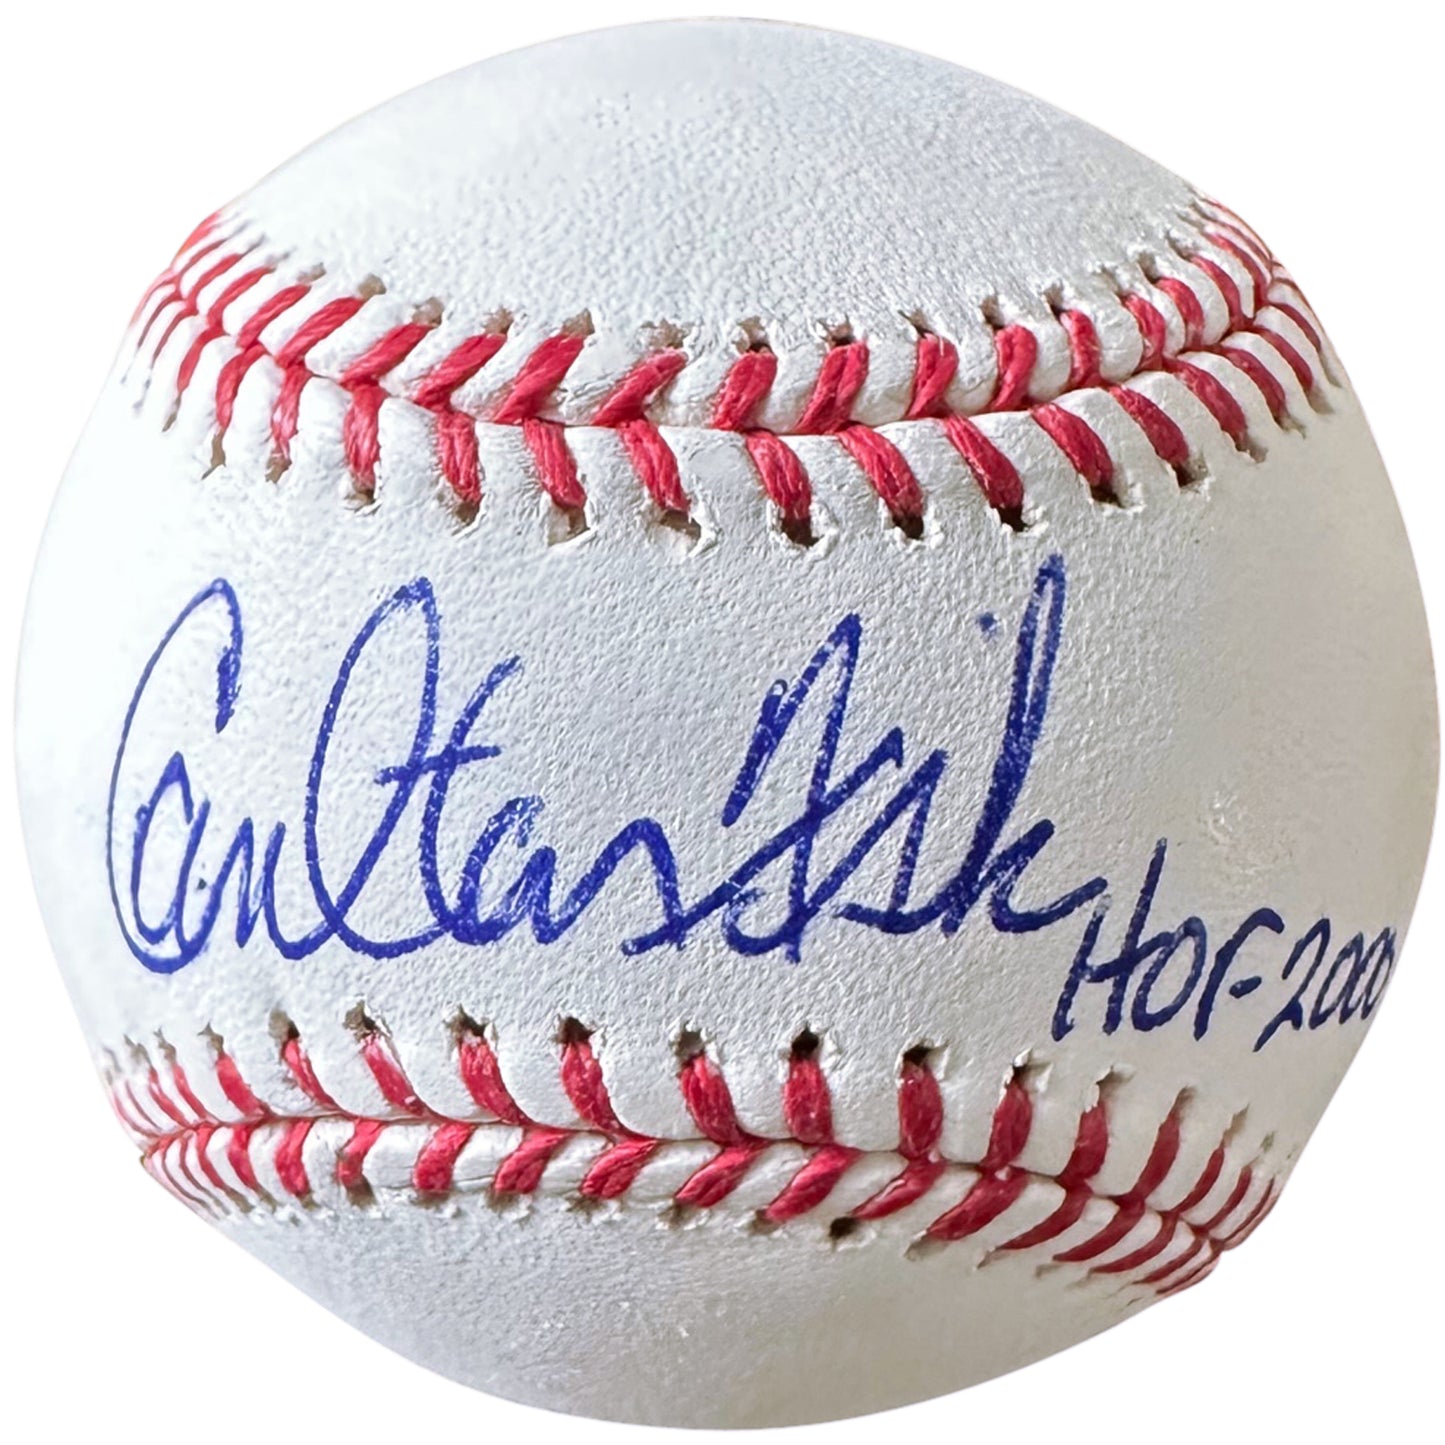 Carlton Fisk Autographed Baseball w/"HOF 2000"